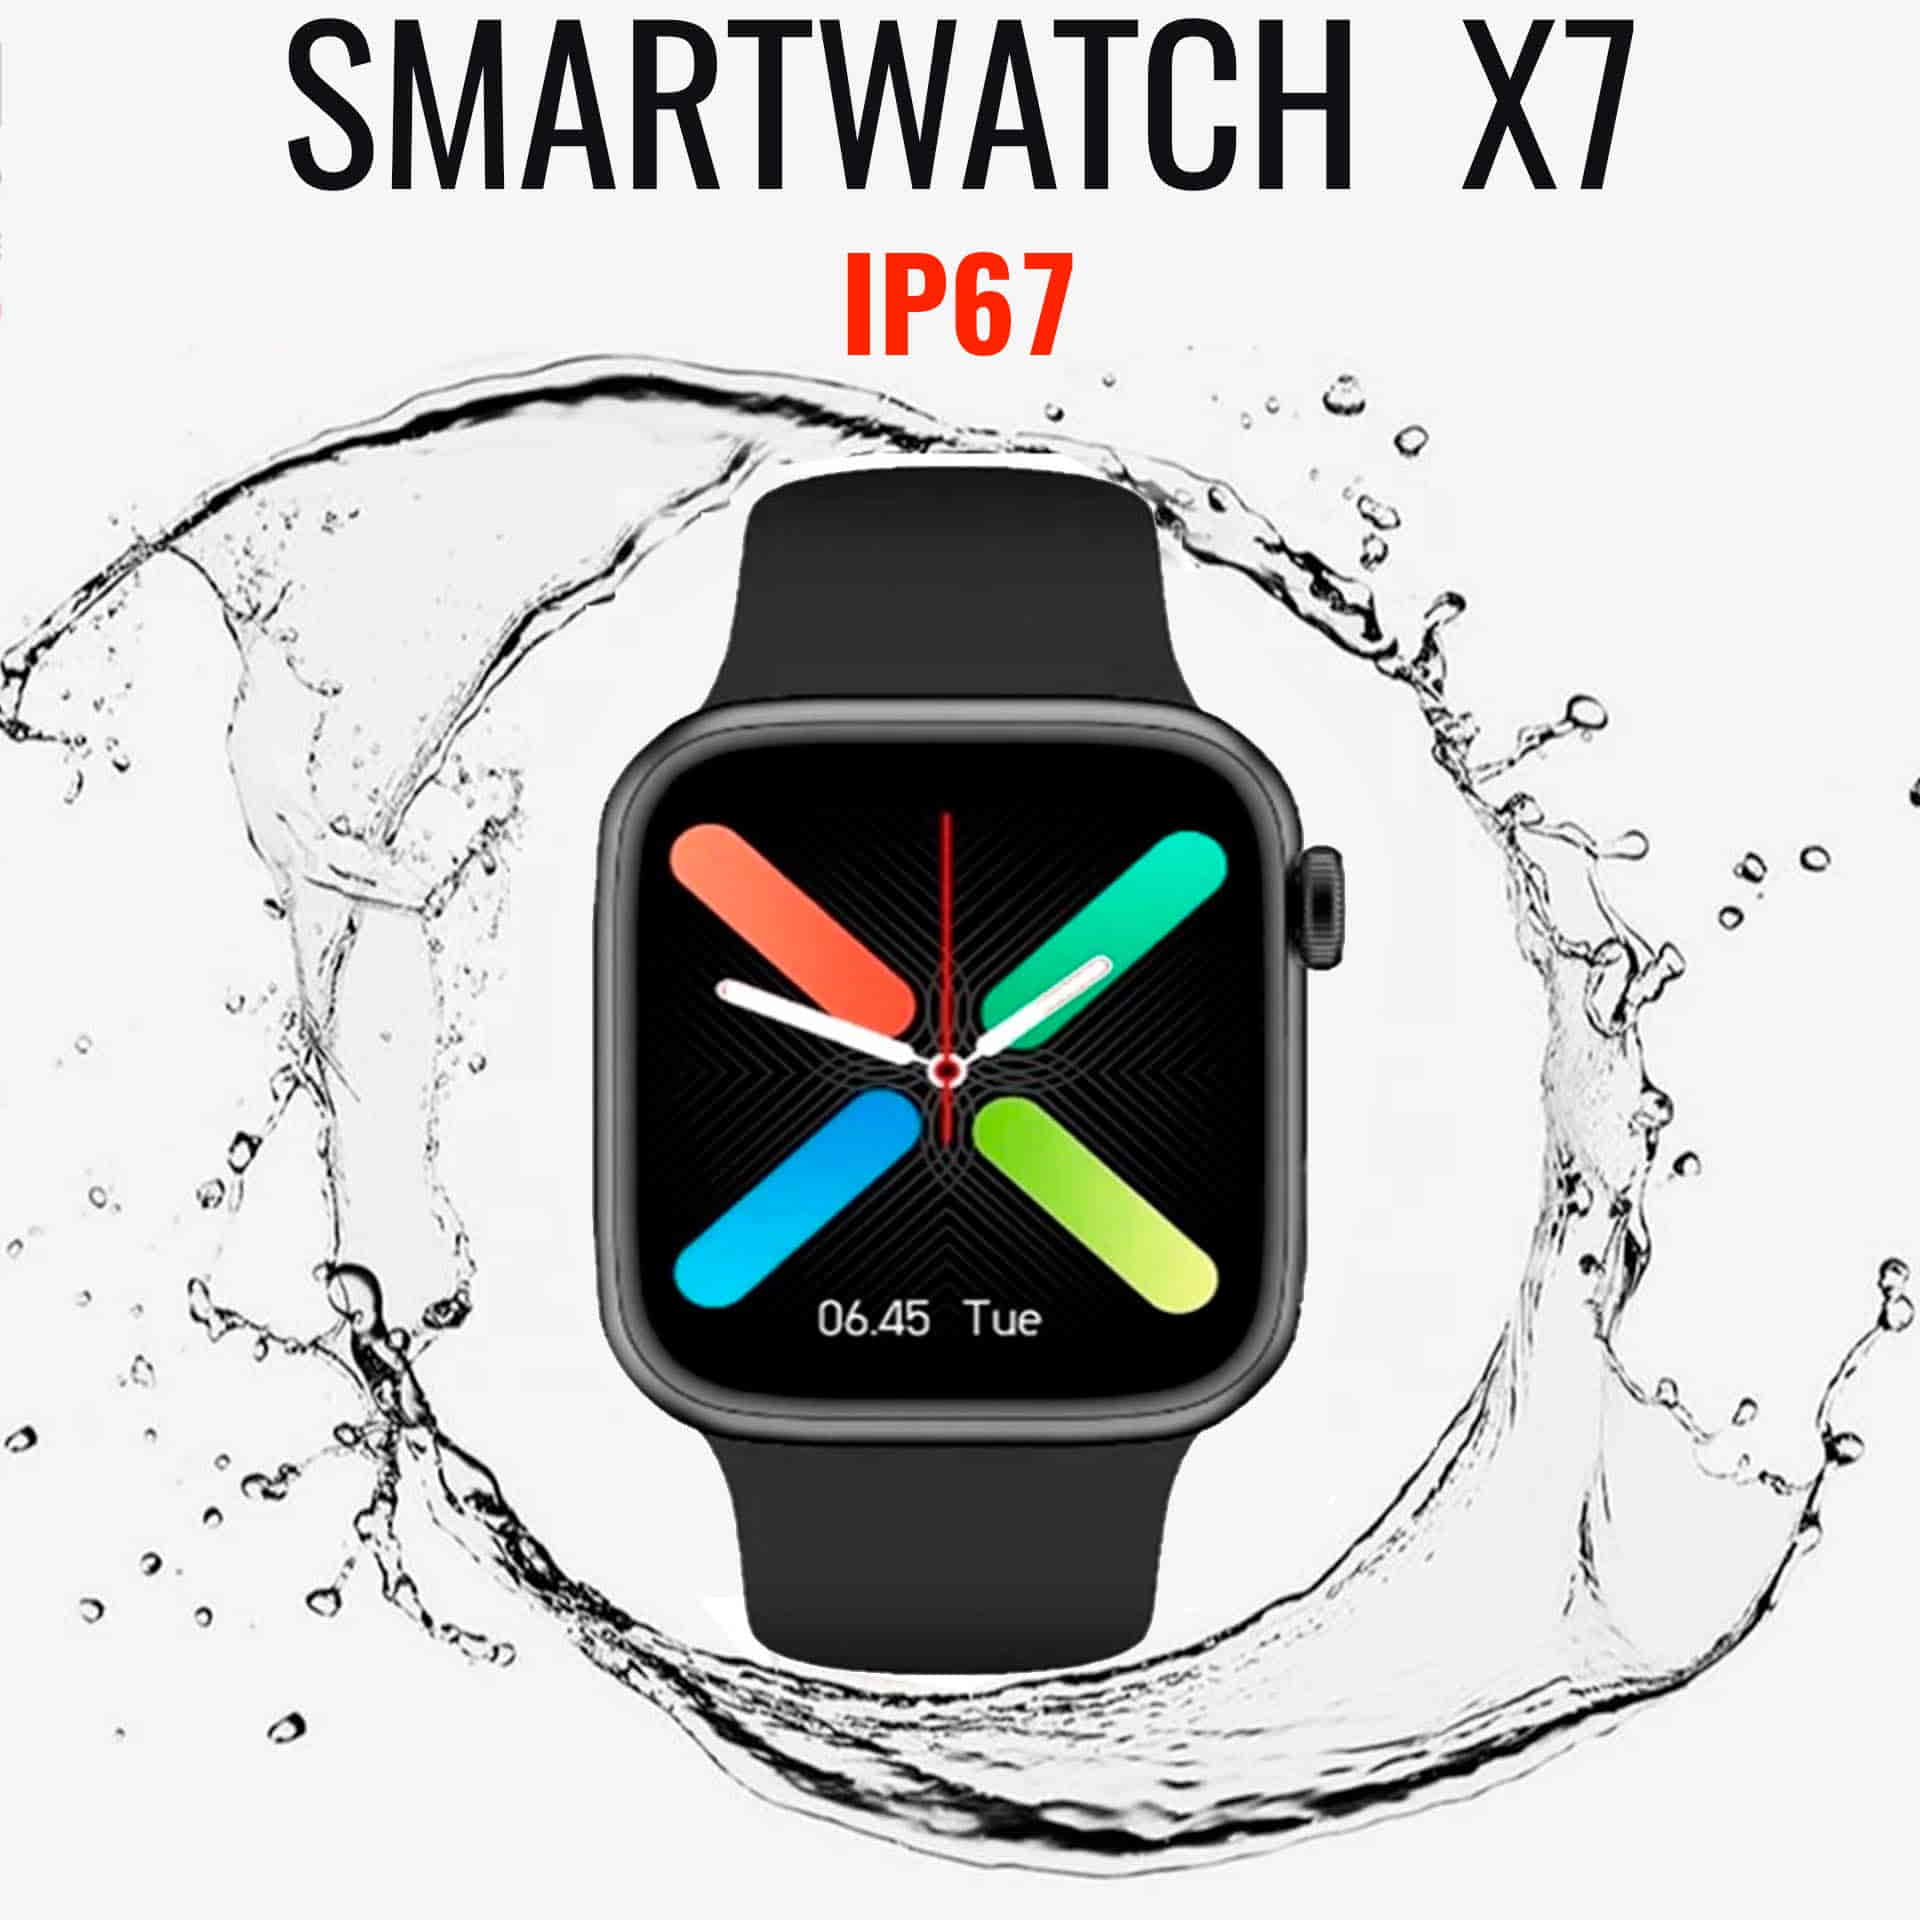 Smartwatch x7 resistente al agua IP67